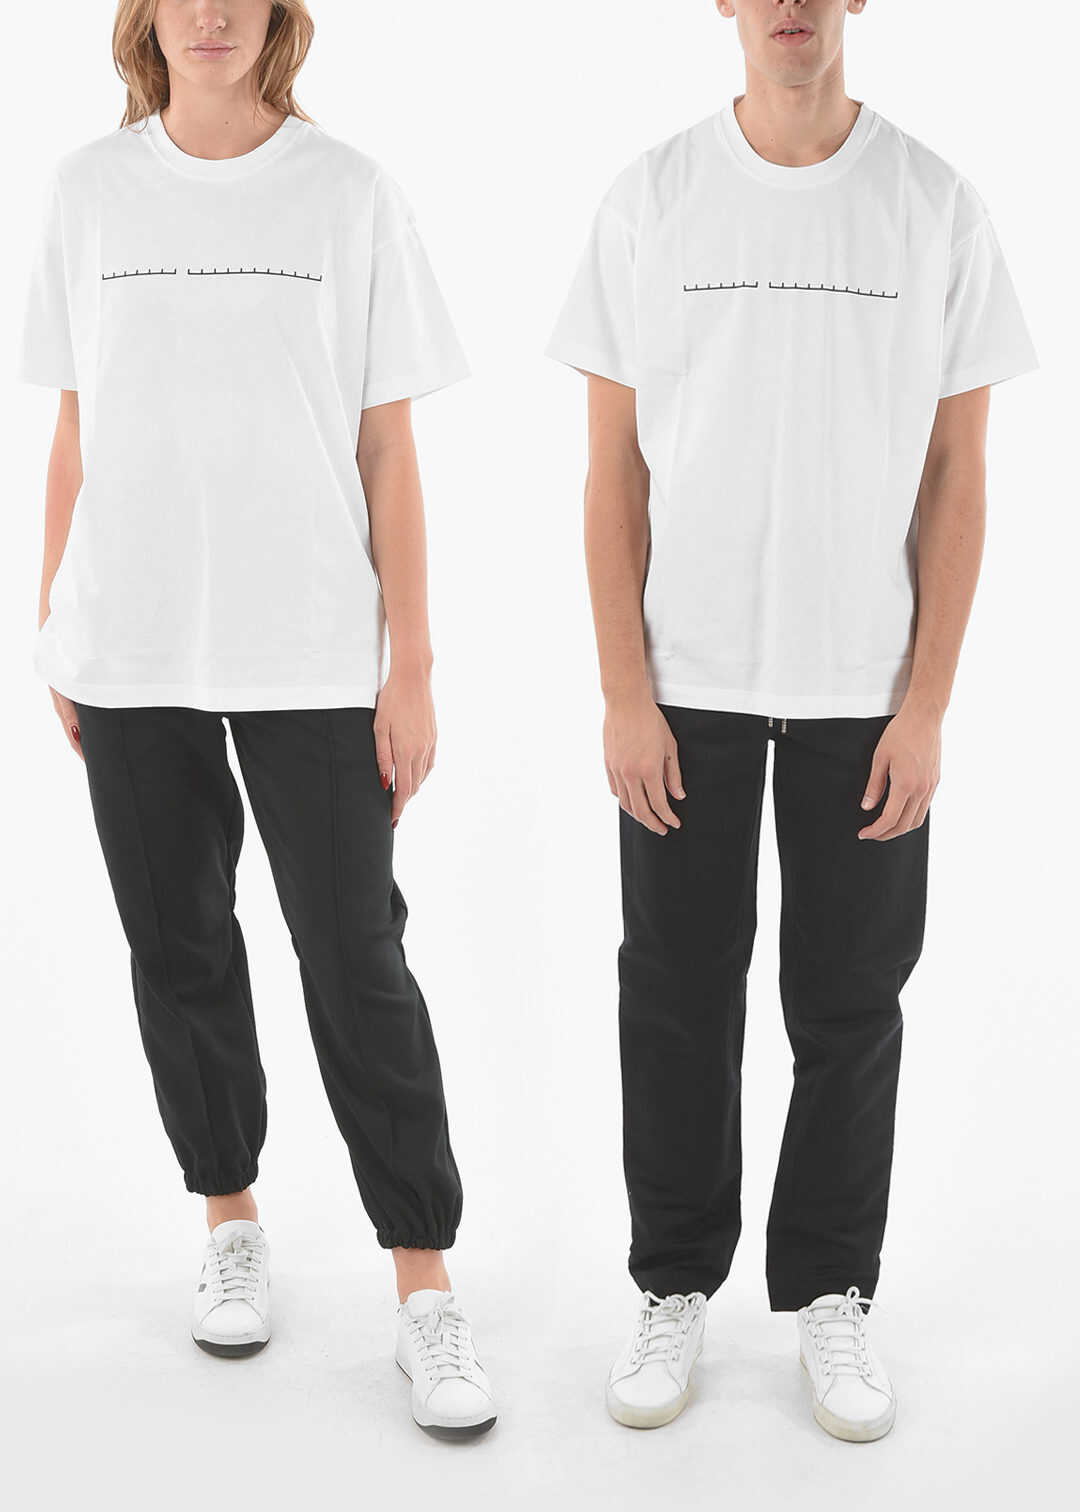 RANDOM IDENTITIES Logo Printed Crew-Neck T-Shirt White